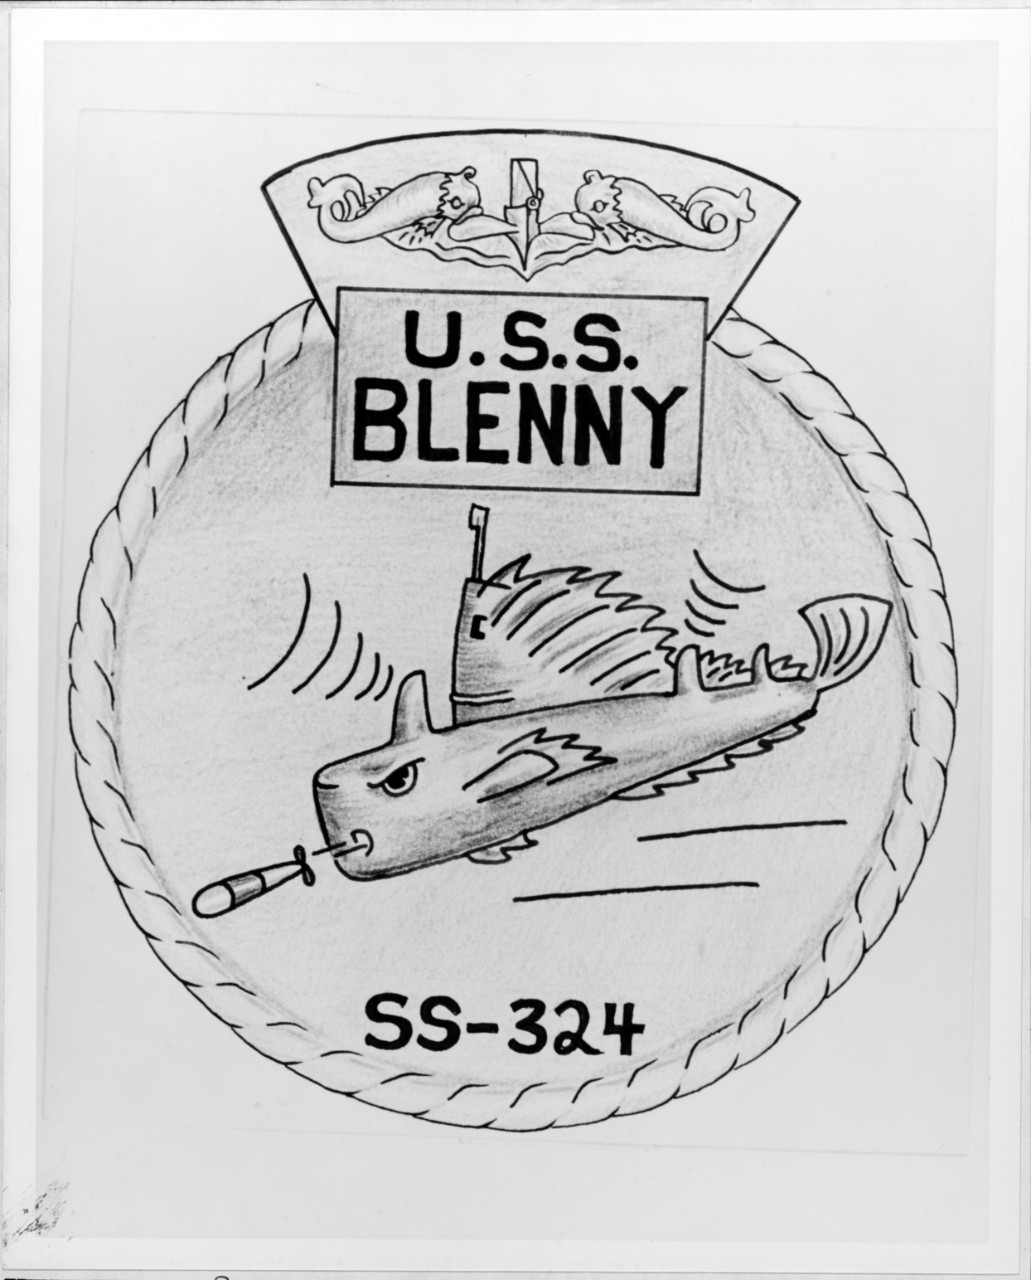 Insignia: USS BLENNY (SS-324)